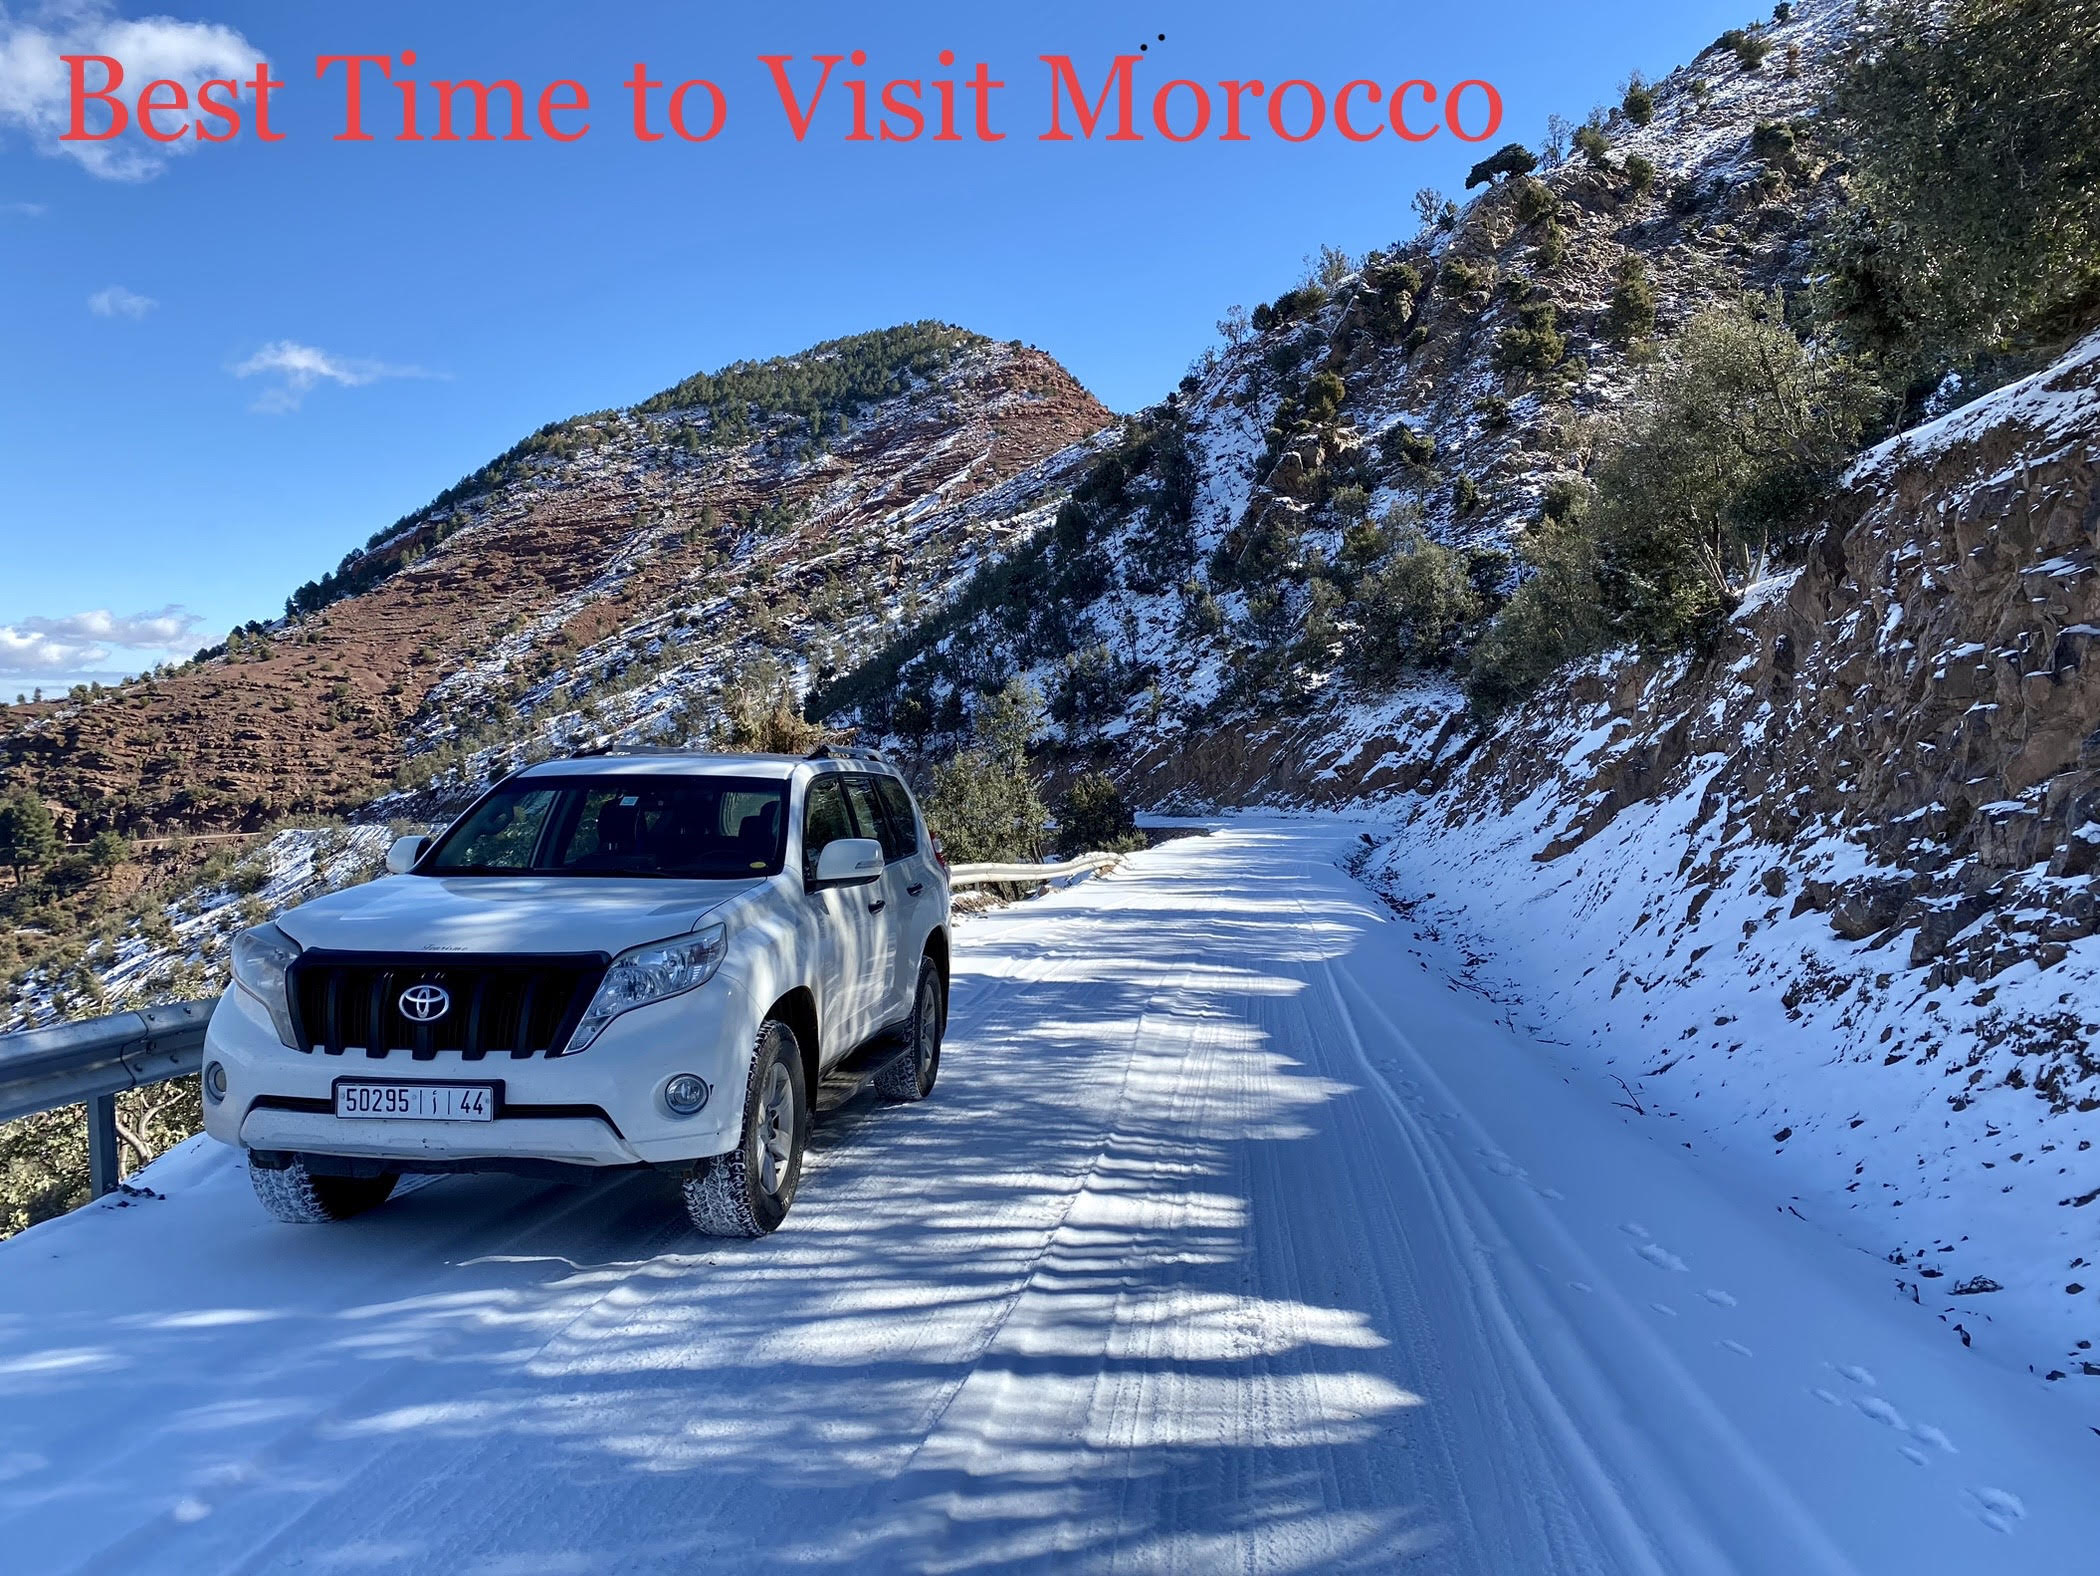 Mejor Época para viajar a Marruecos